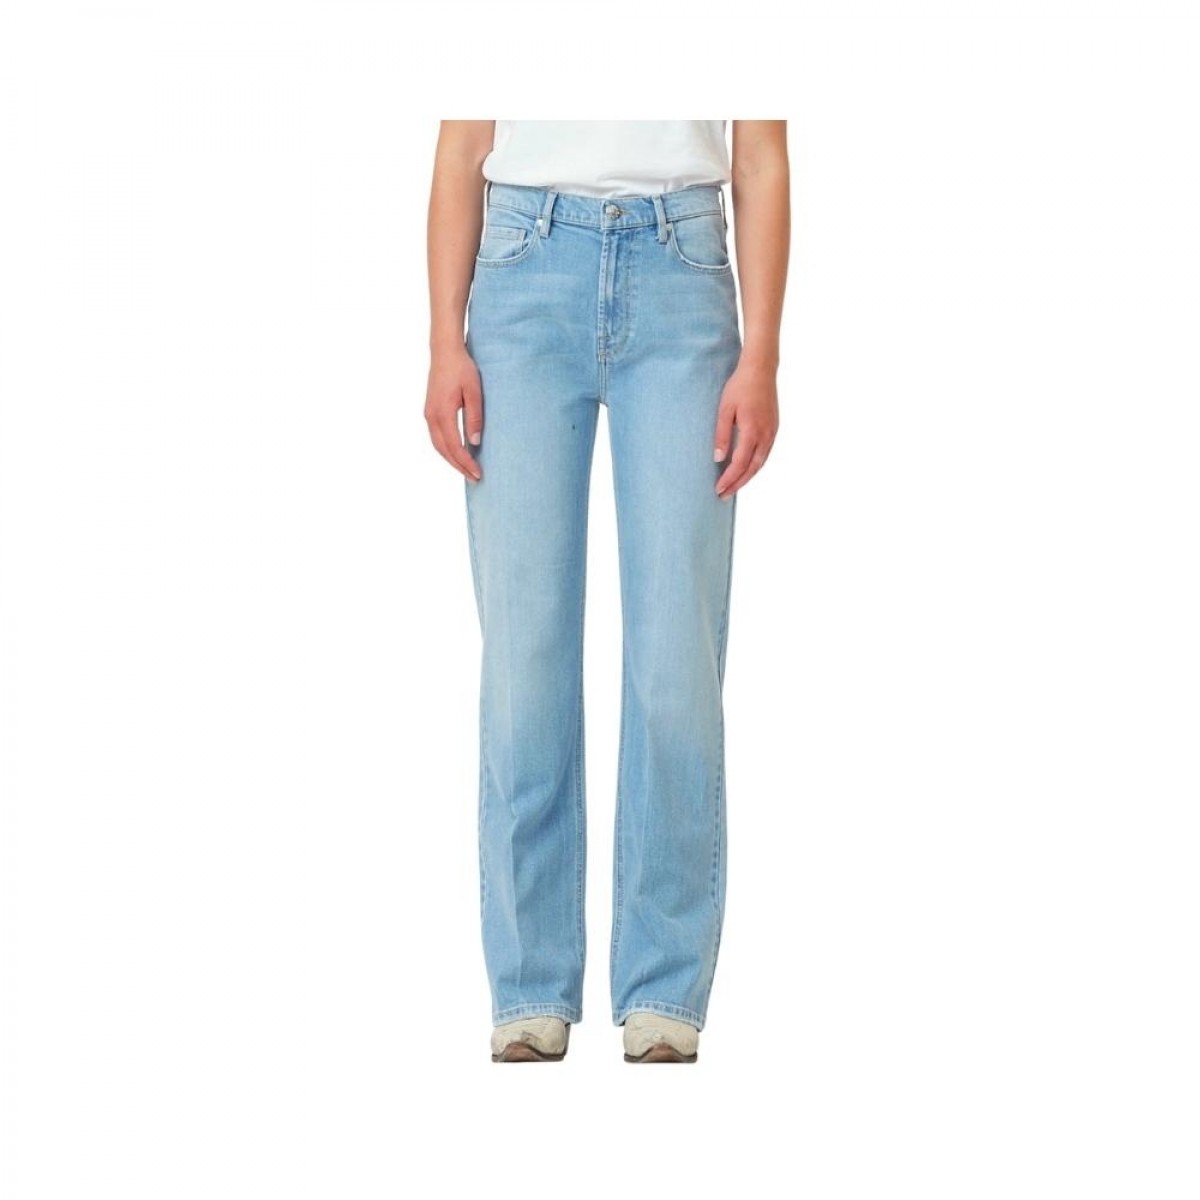 brown straight jeans - denim blue - front detalje